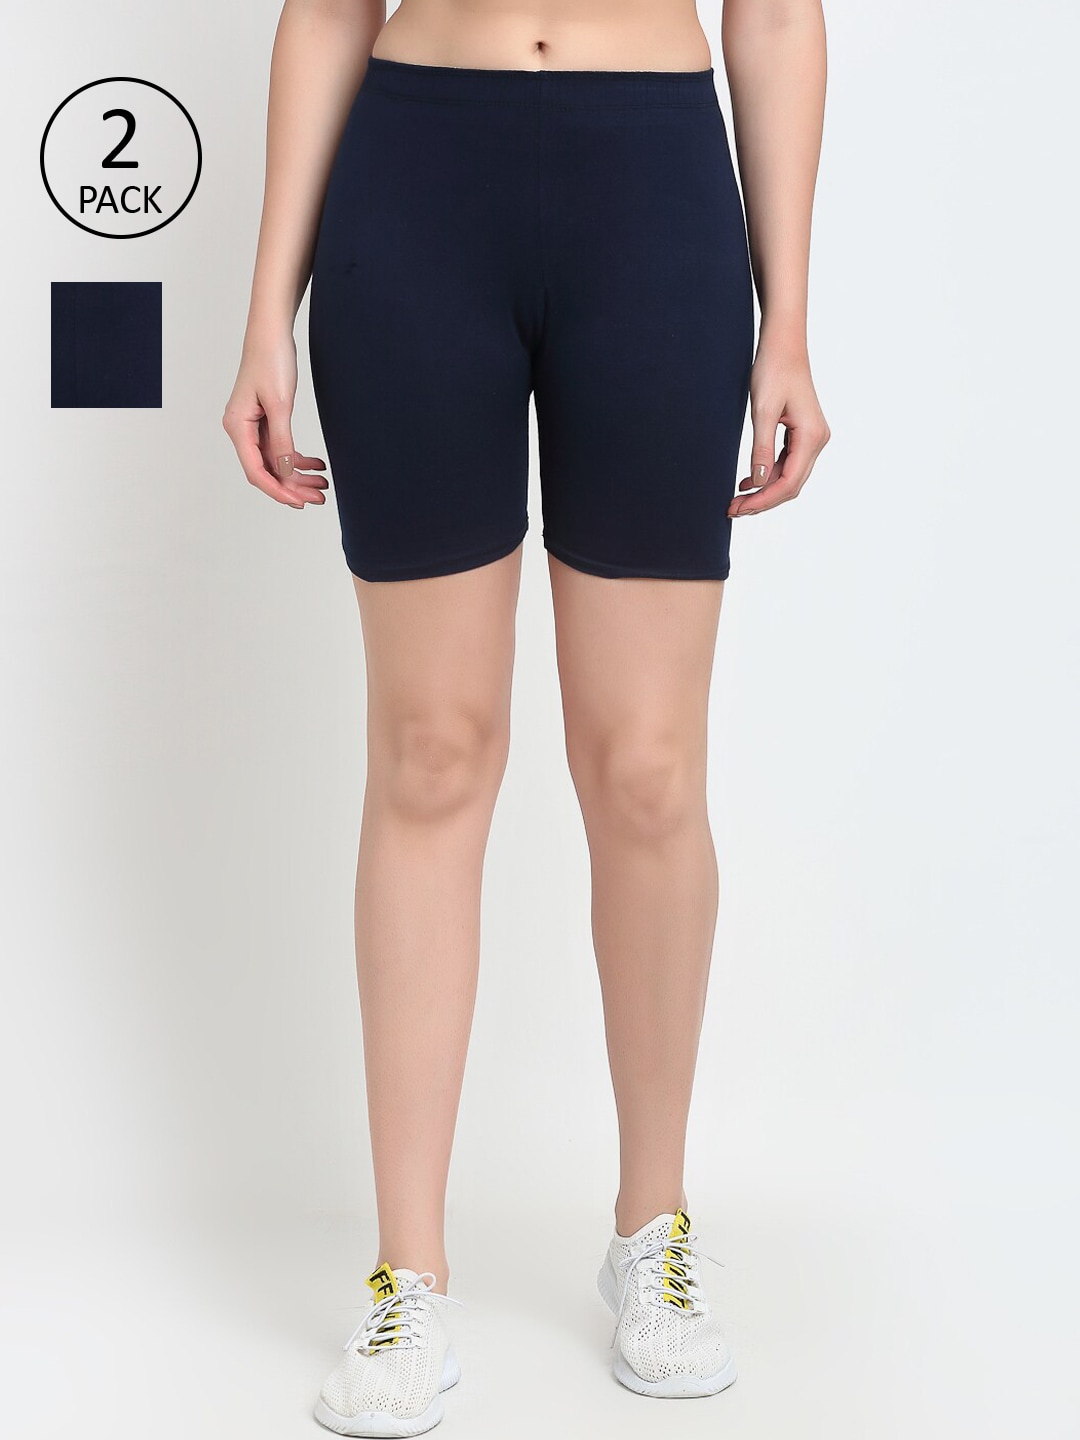 GRACIT Women Set of 2 Navy Blue Skinny Fit Biker Shorts Price in India